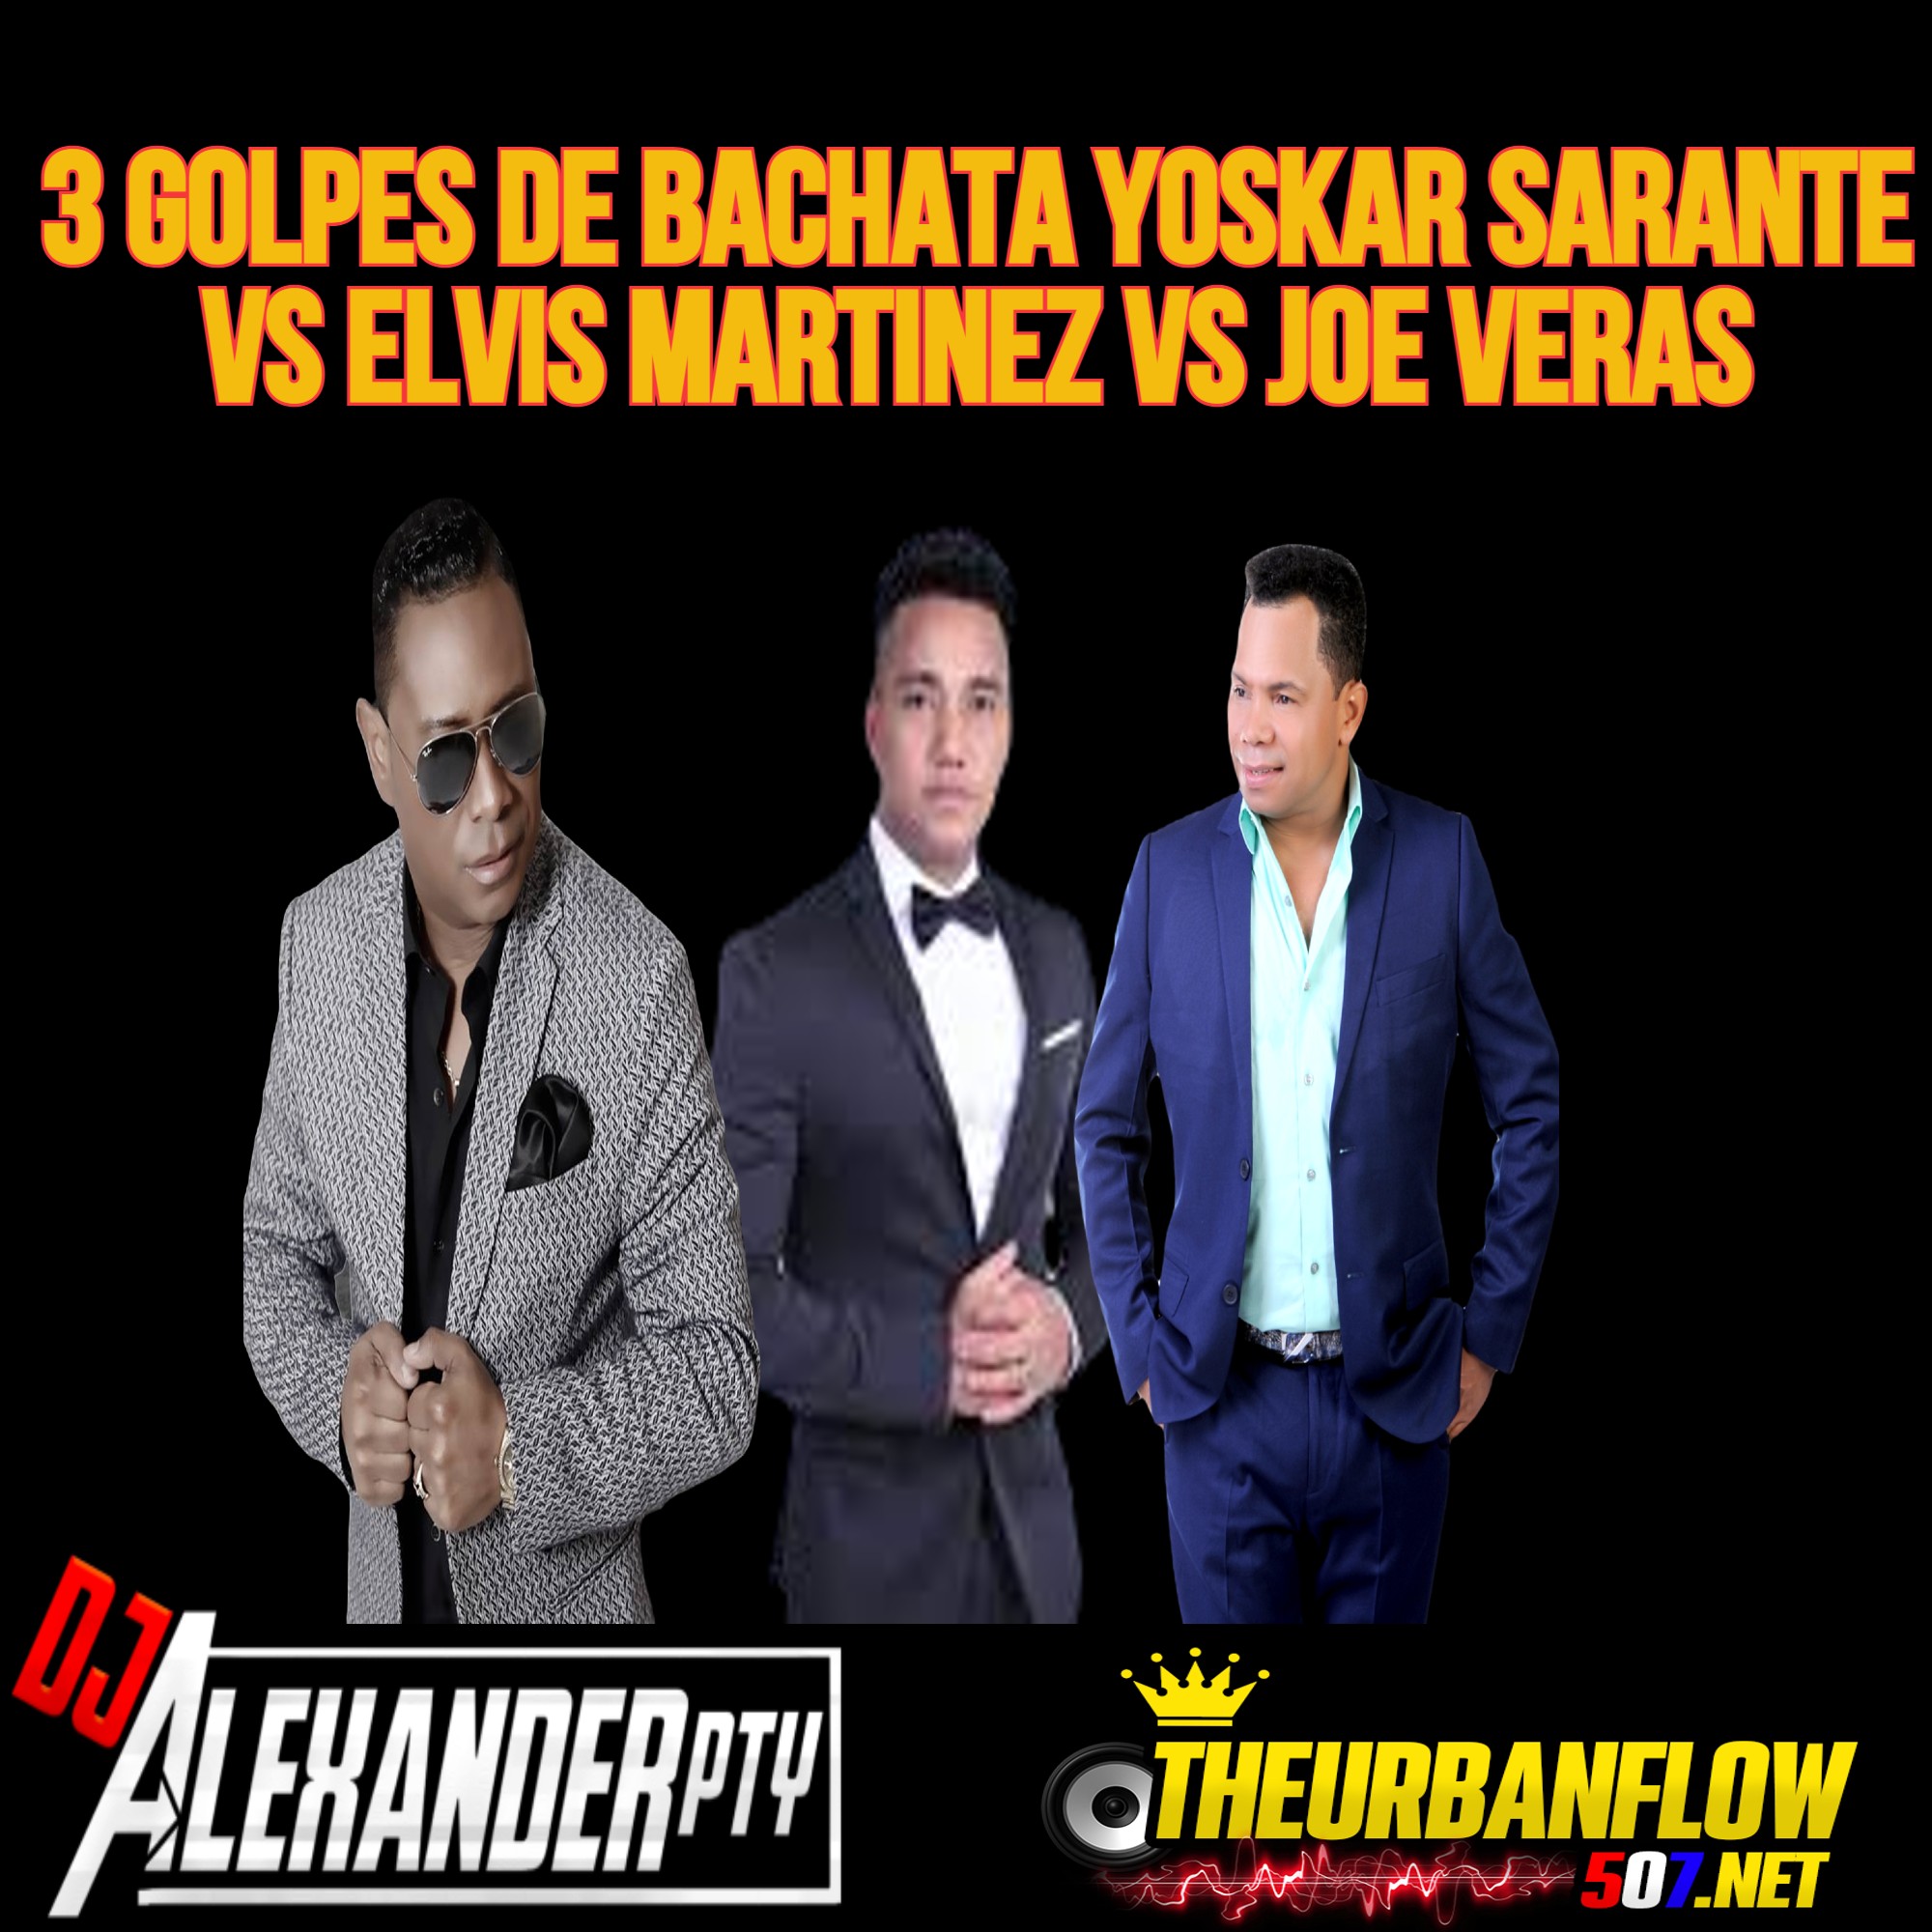 3 GOLPES DE BACHATA YOSKAR SARANTE vs ELVIS MARTINEZ vs JOE VERAS MIX -@DJALEXANDERPTY